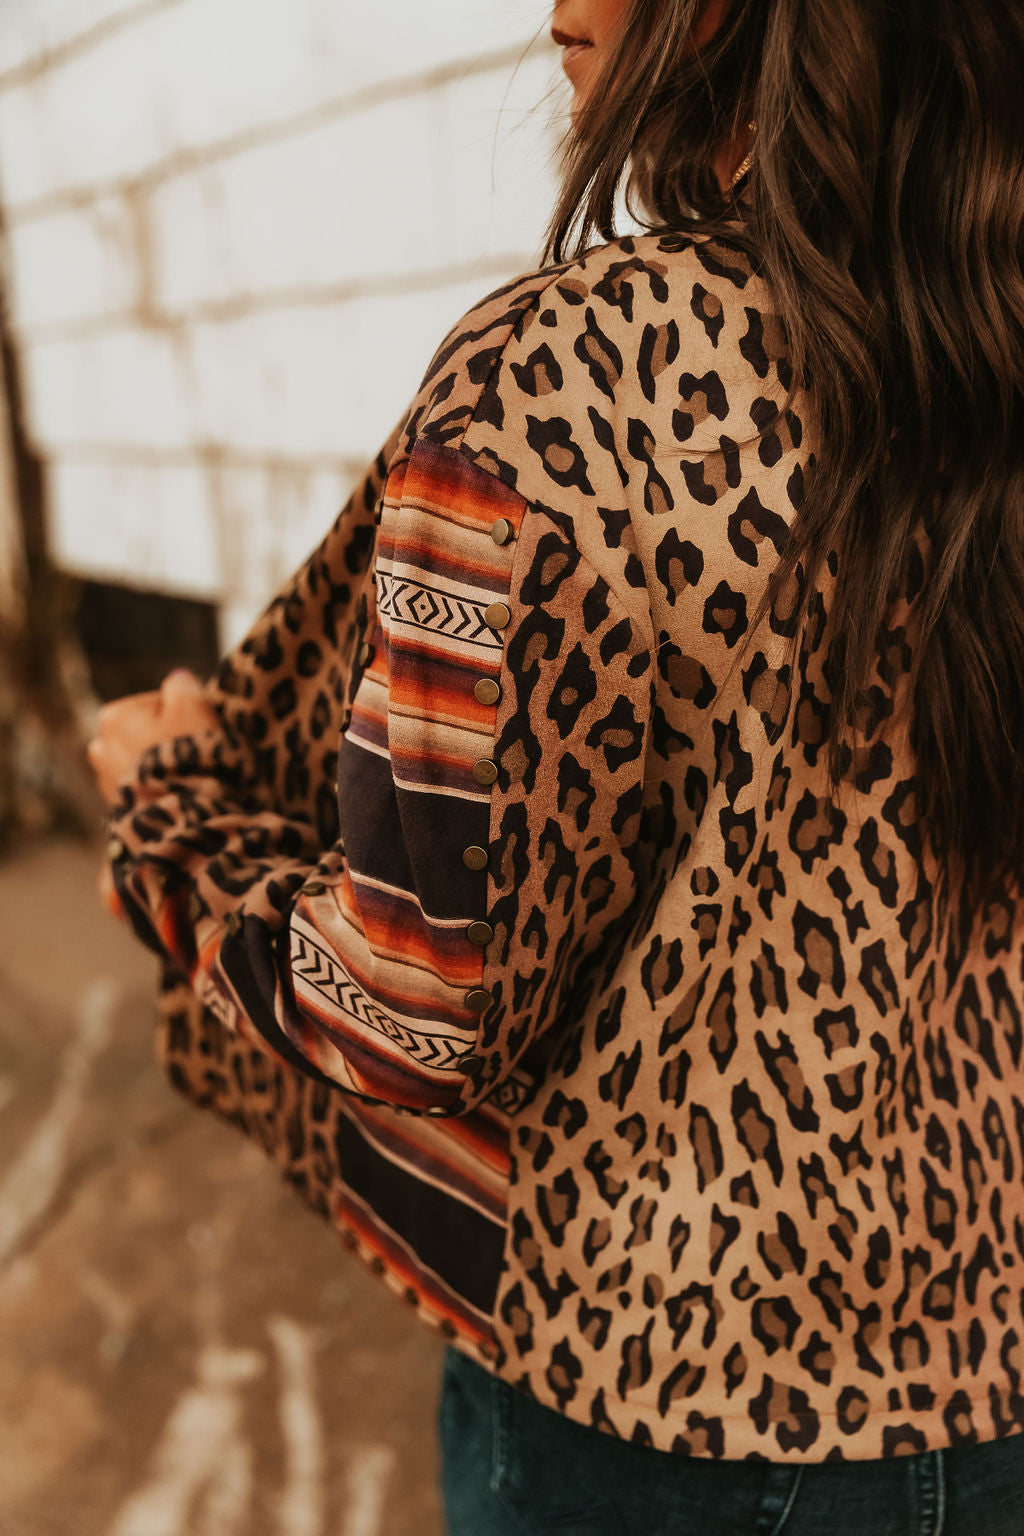 Cheetah/ serape jacket